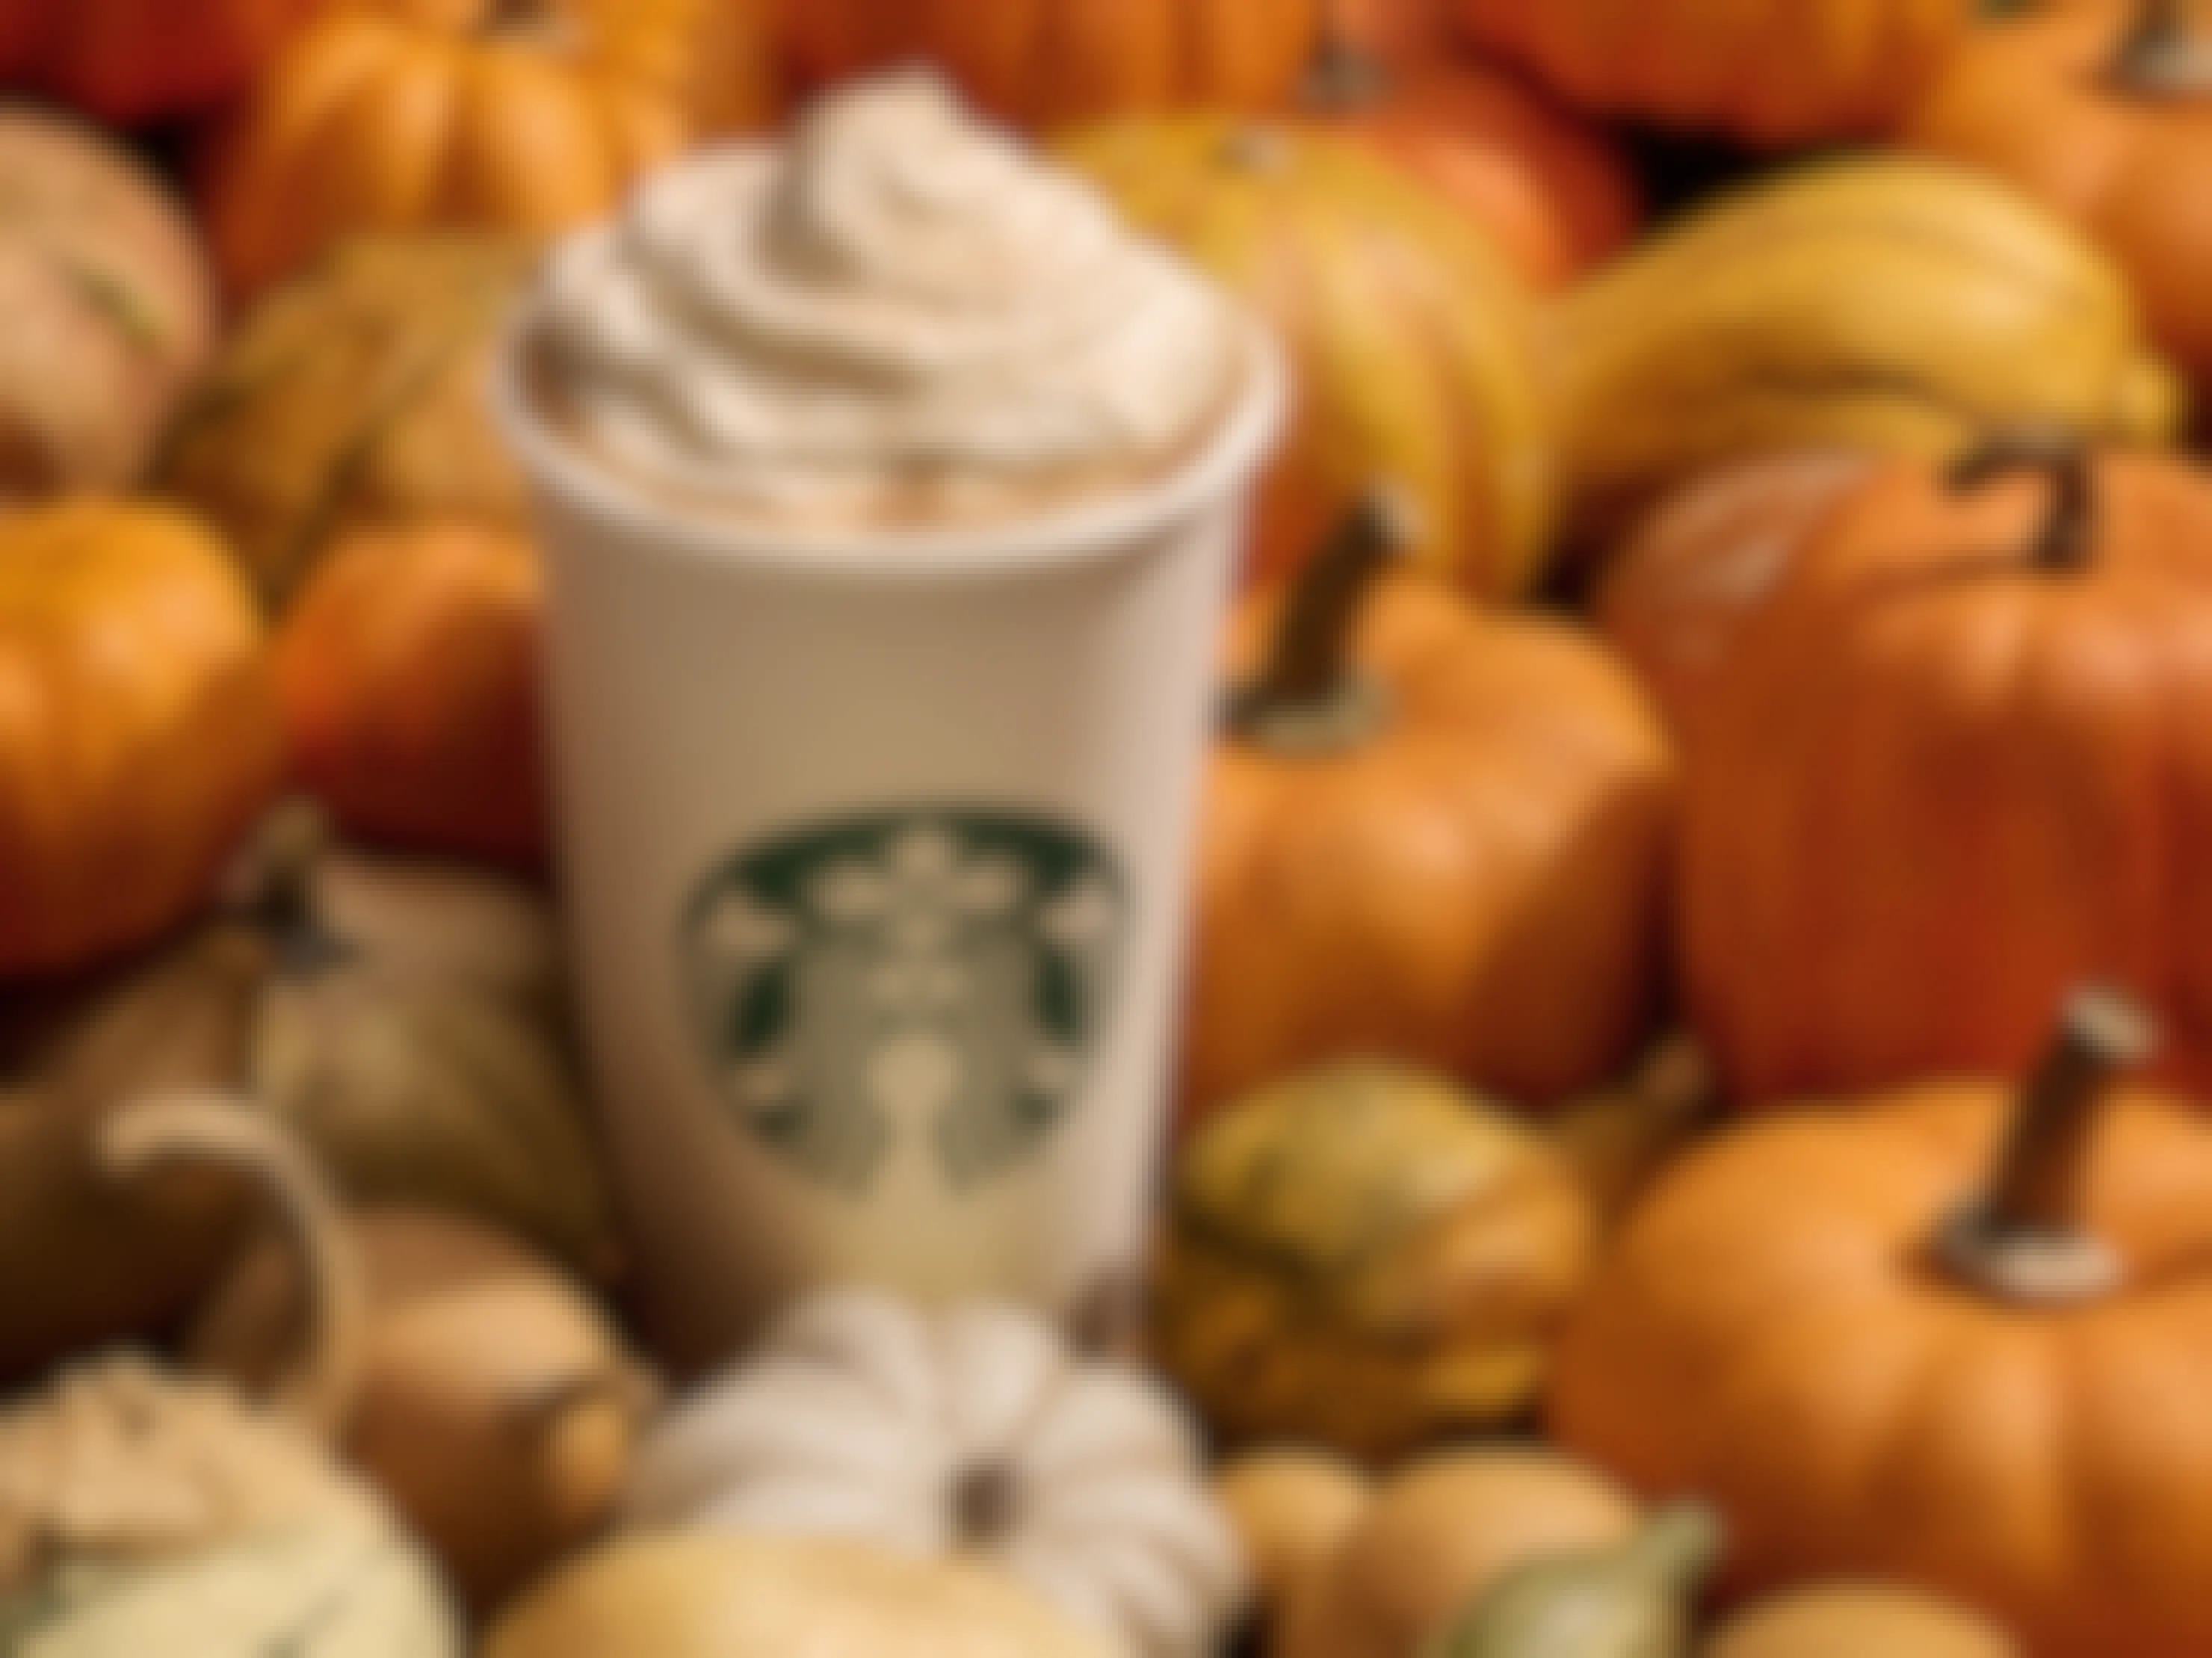 a Starbucks Pumpkin Spice Latte set against a background of various pumpkins